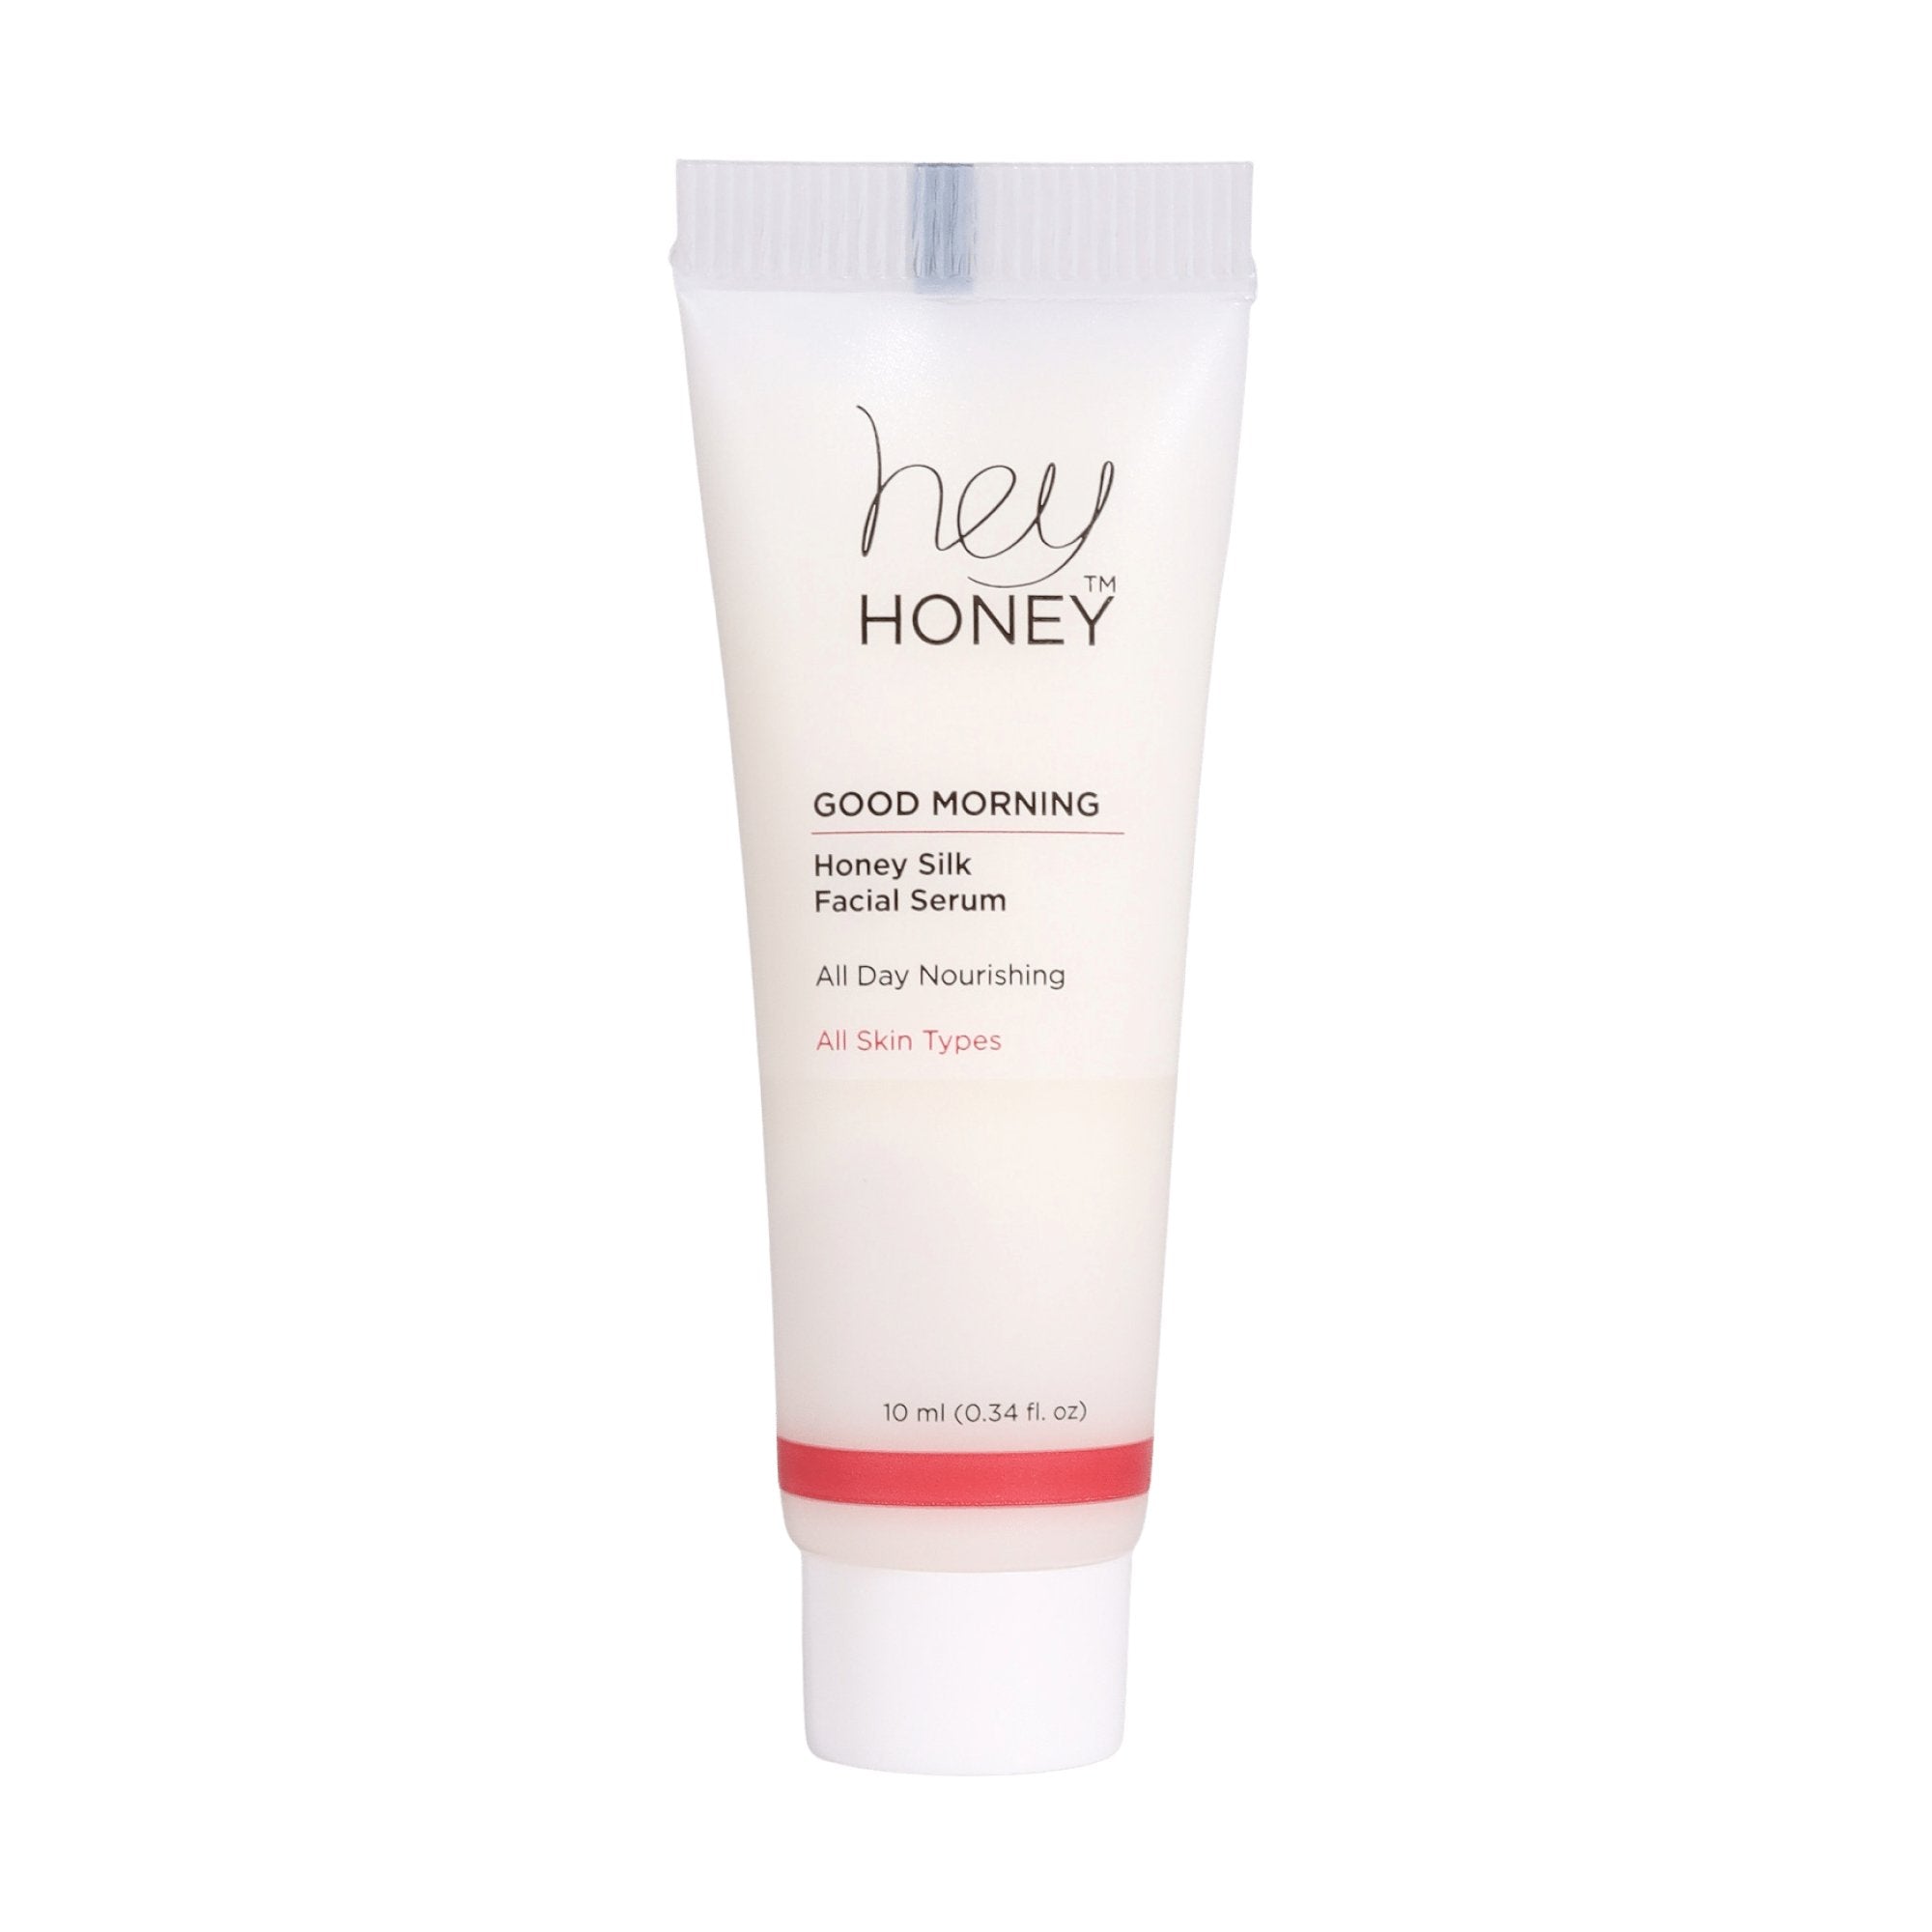 Good Morning Honey Silk Facial Serum 10ml - Brand Introduction Kit For Complex Skin - Hey Honey Beauty